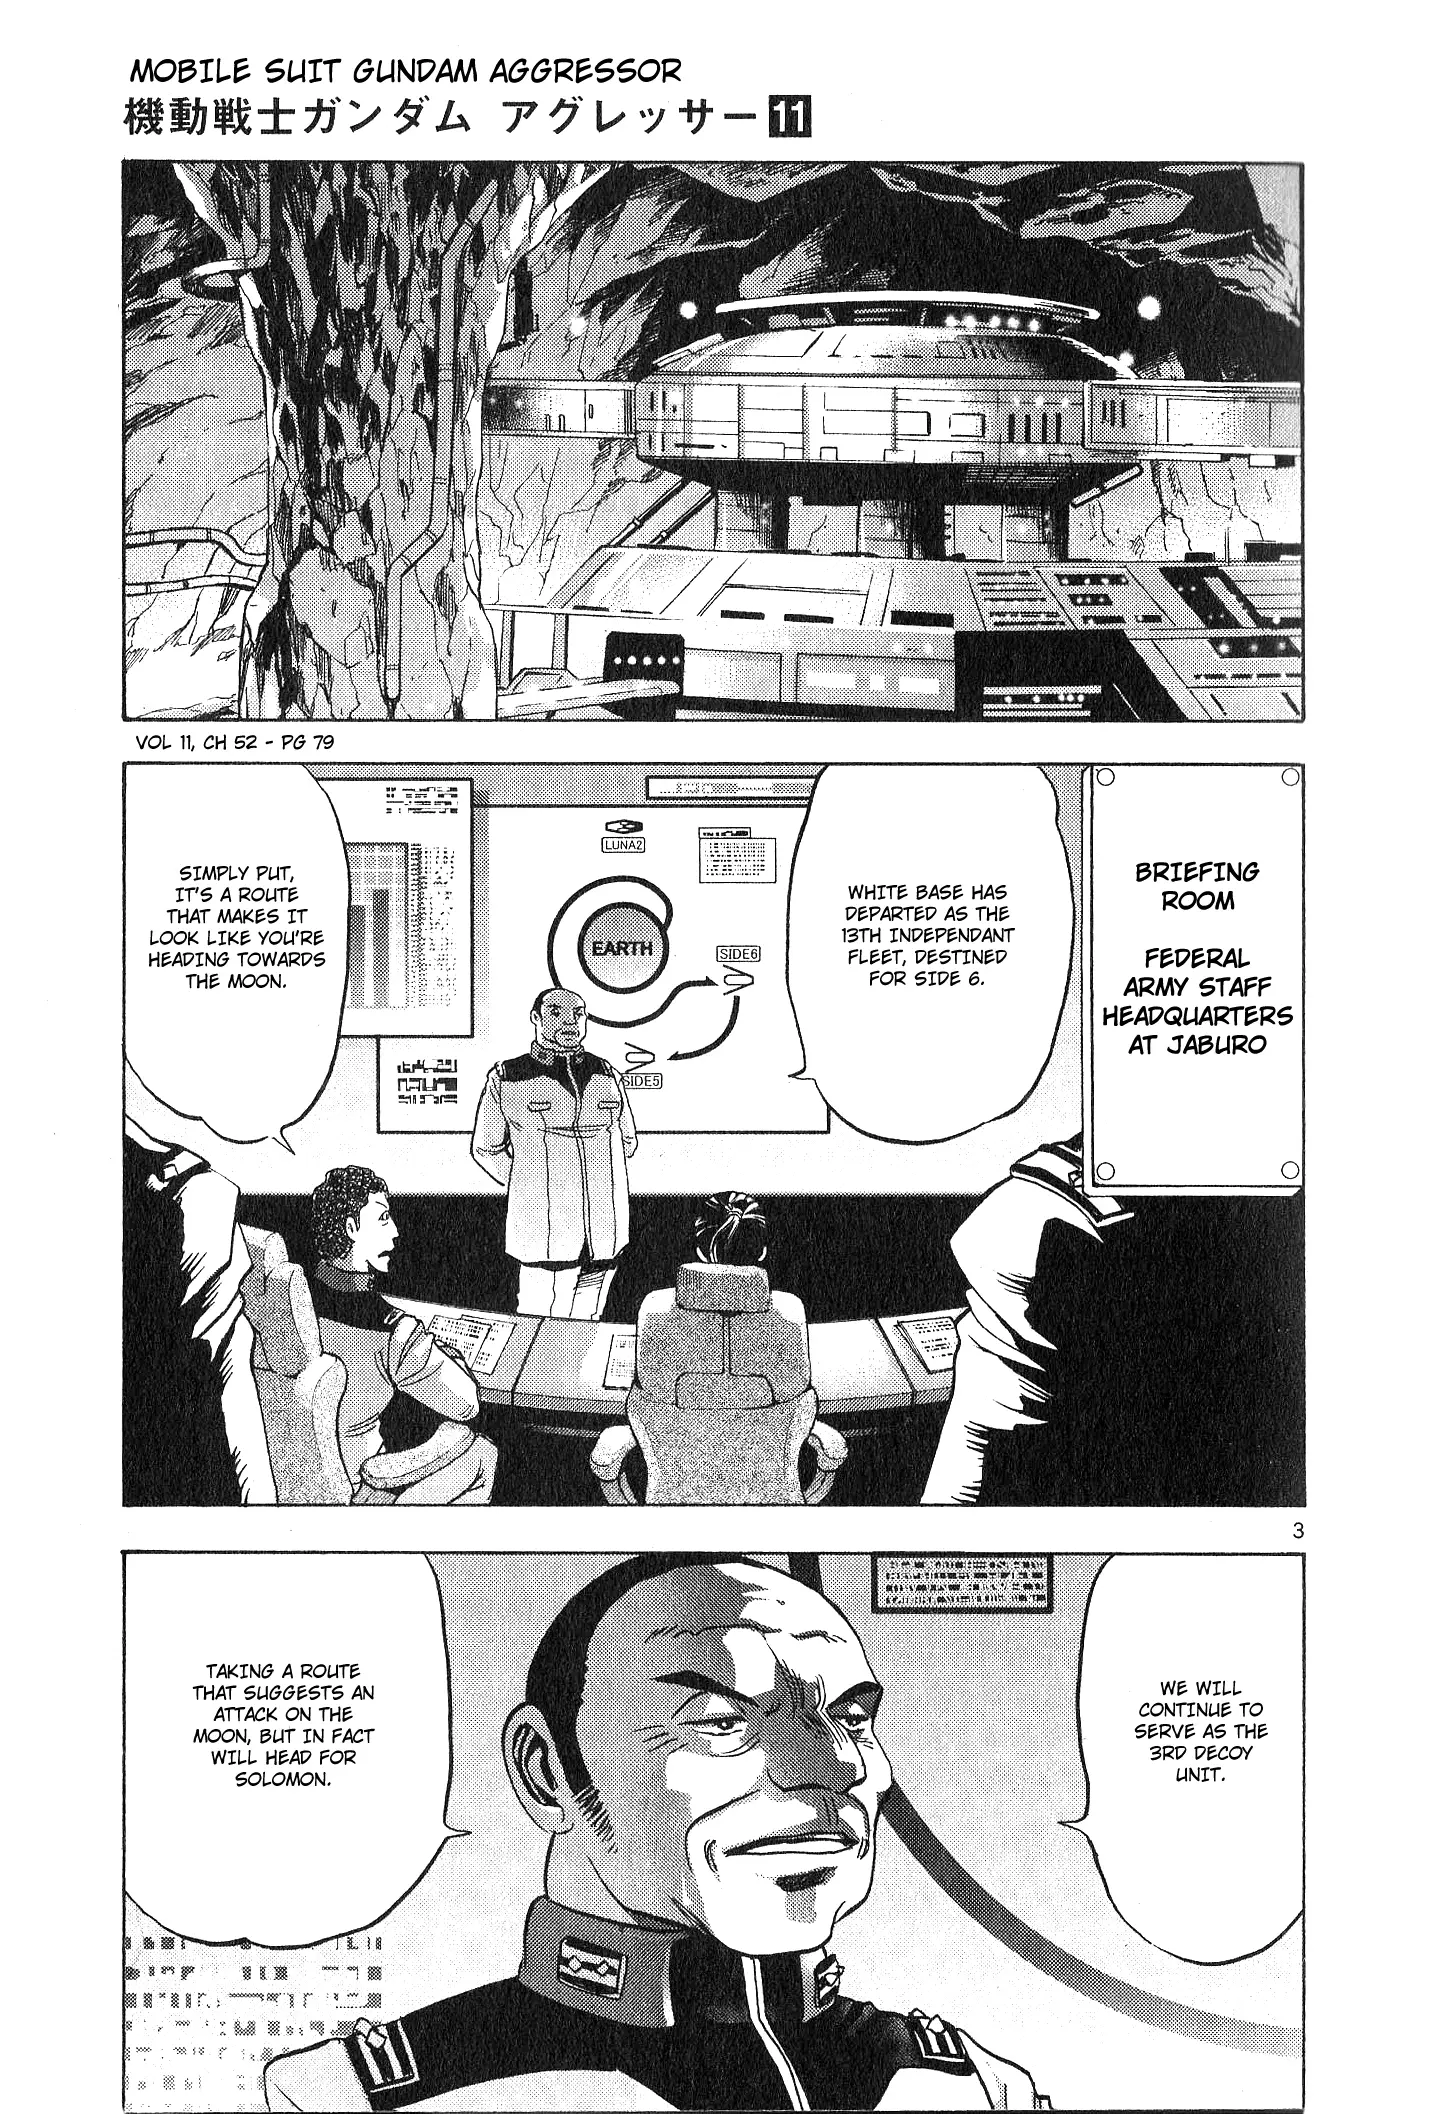 Mobile Suit Gundam Aggressor - 52 page 3-0f79448f